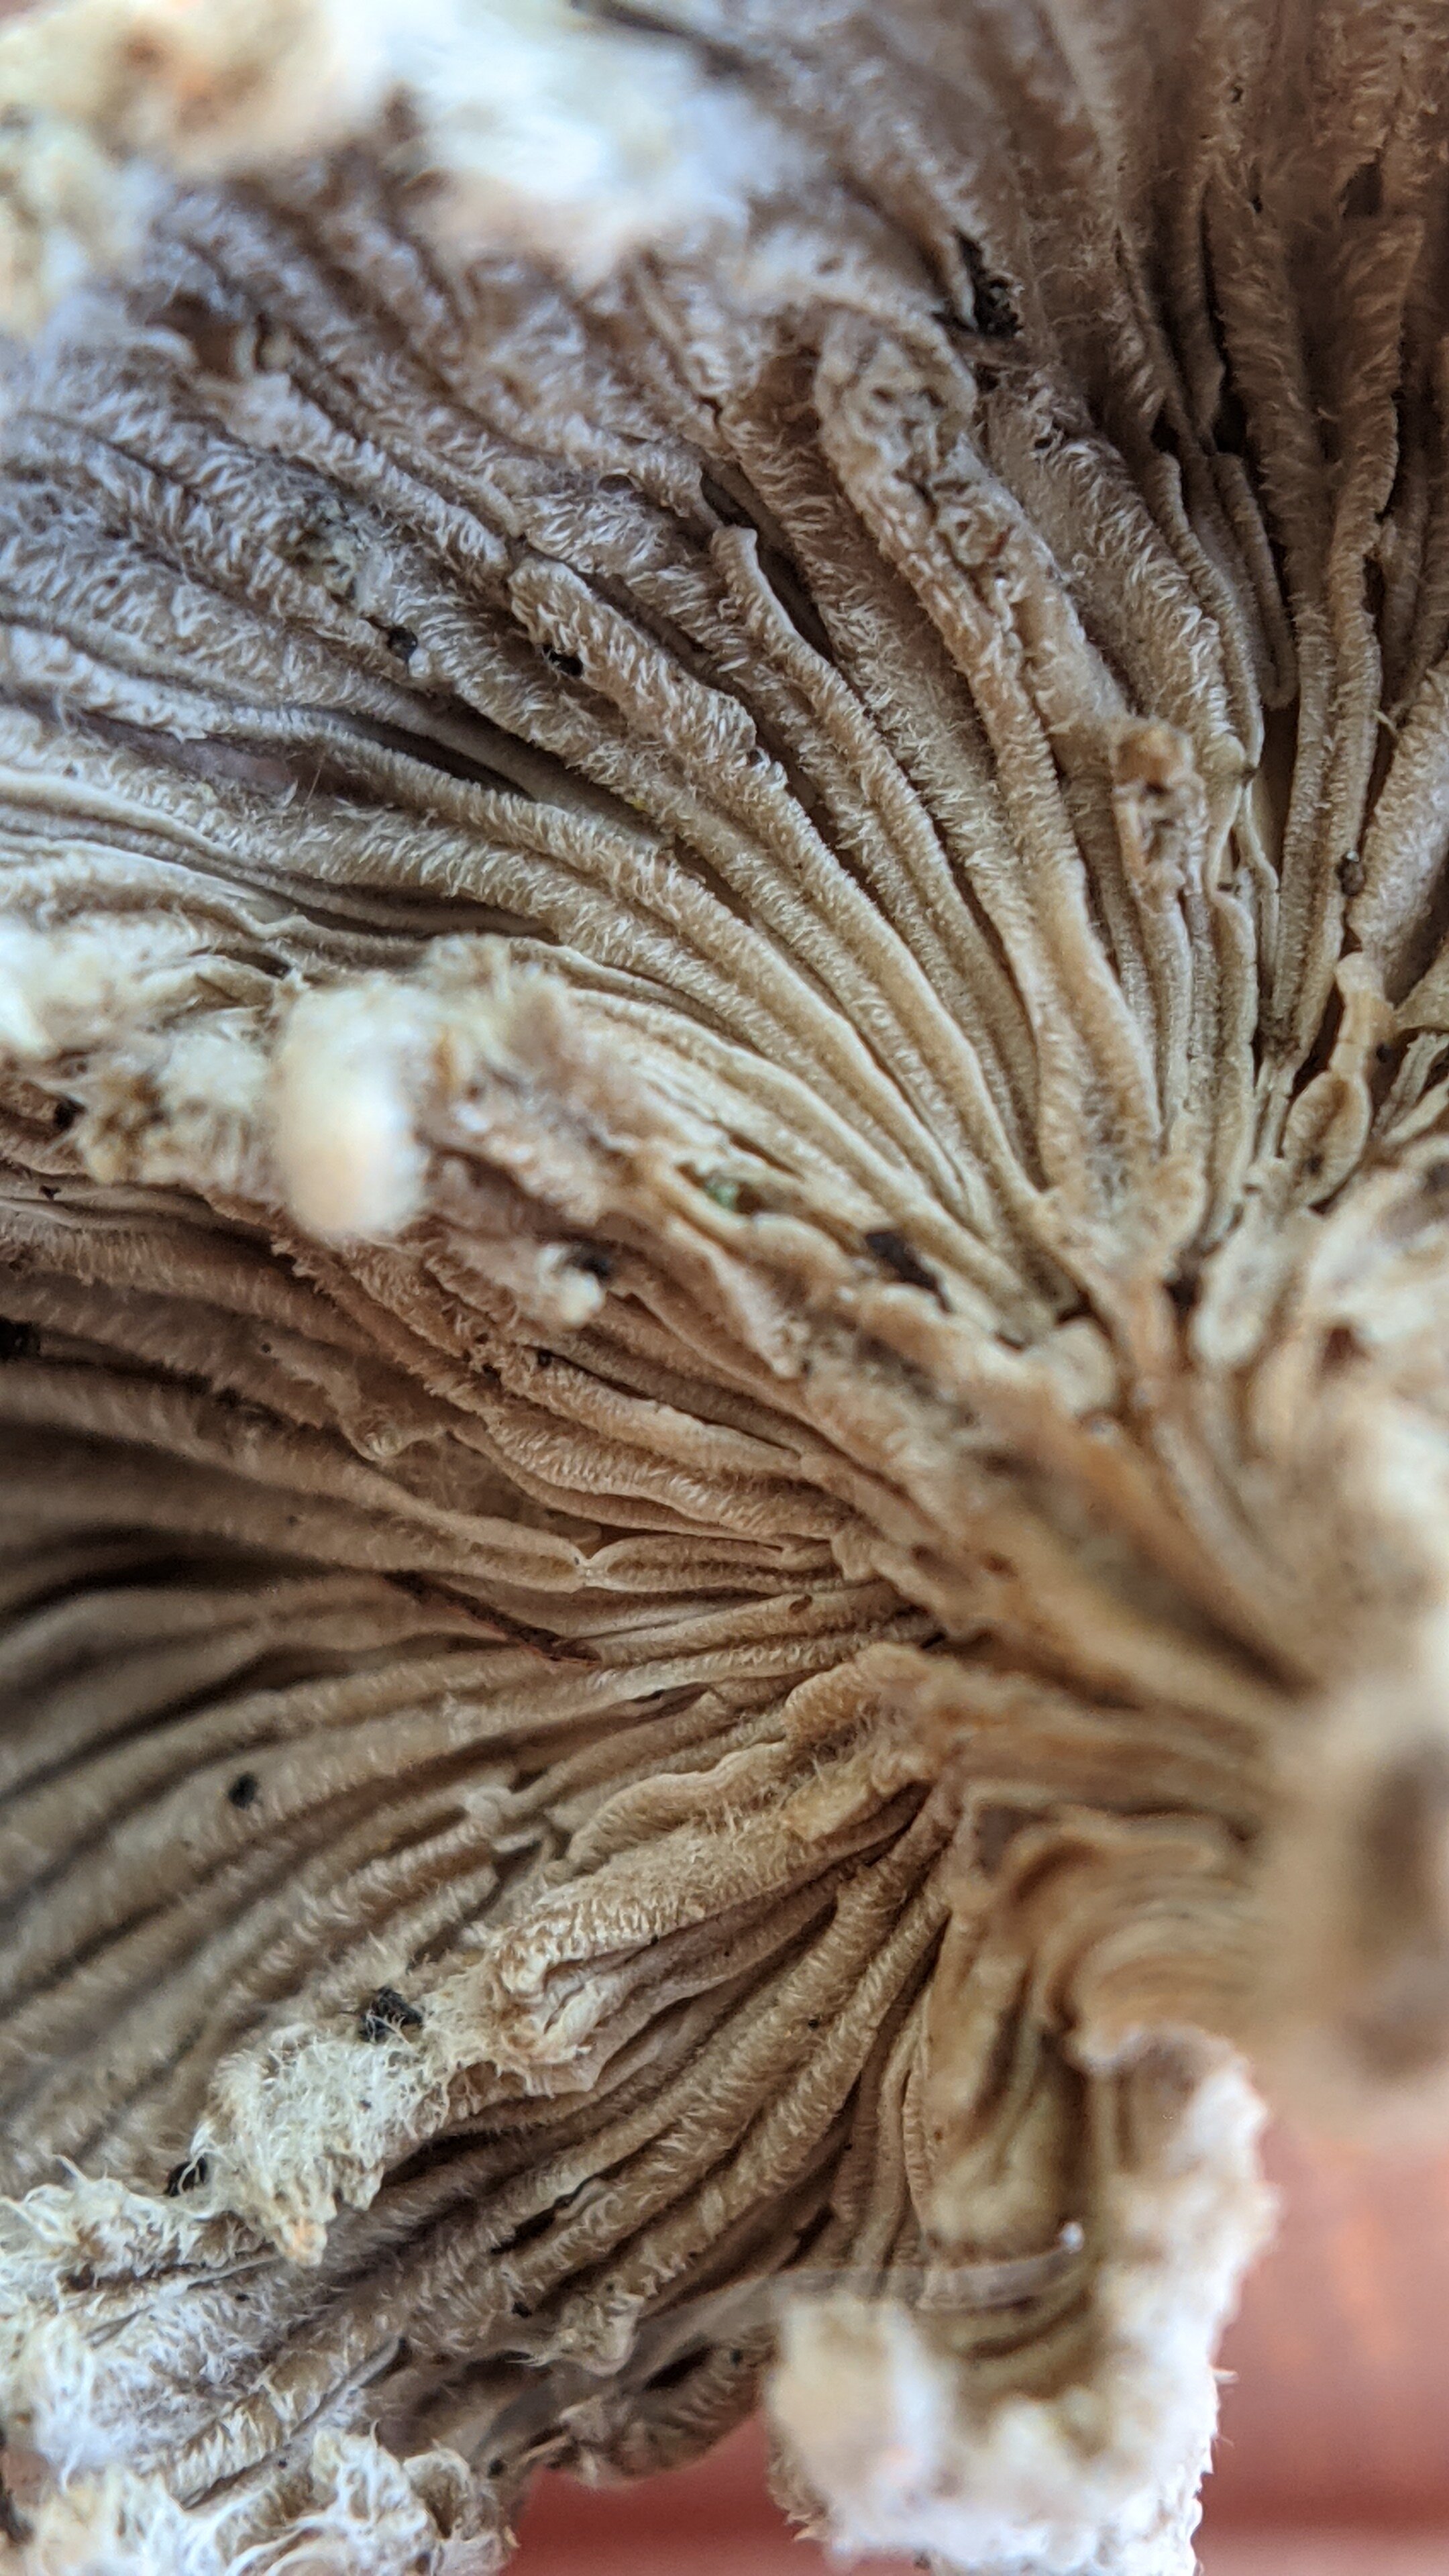 Splitgill Mushroom, Schizophyllum commune